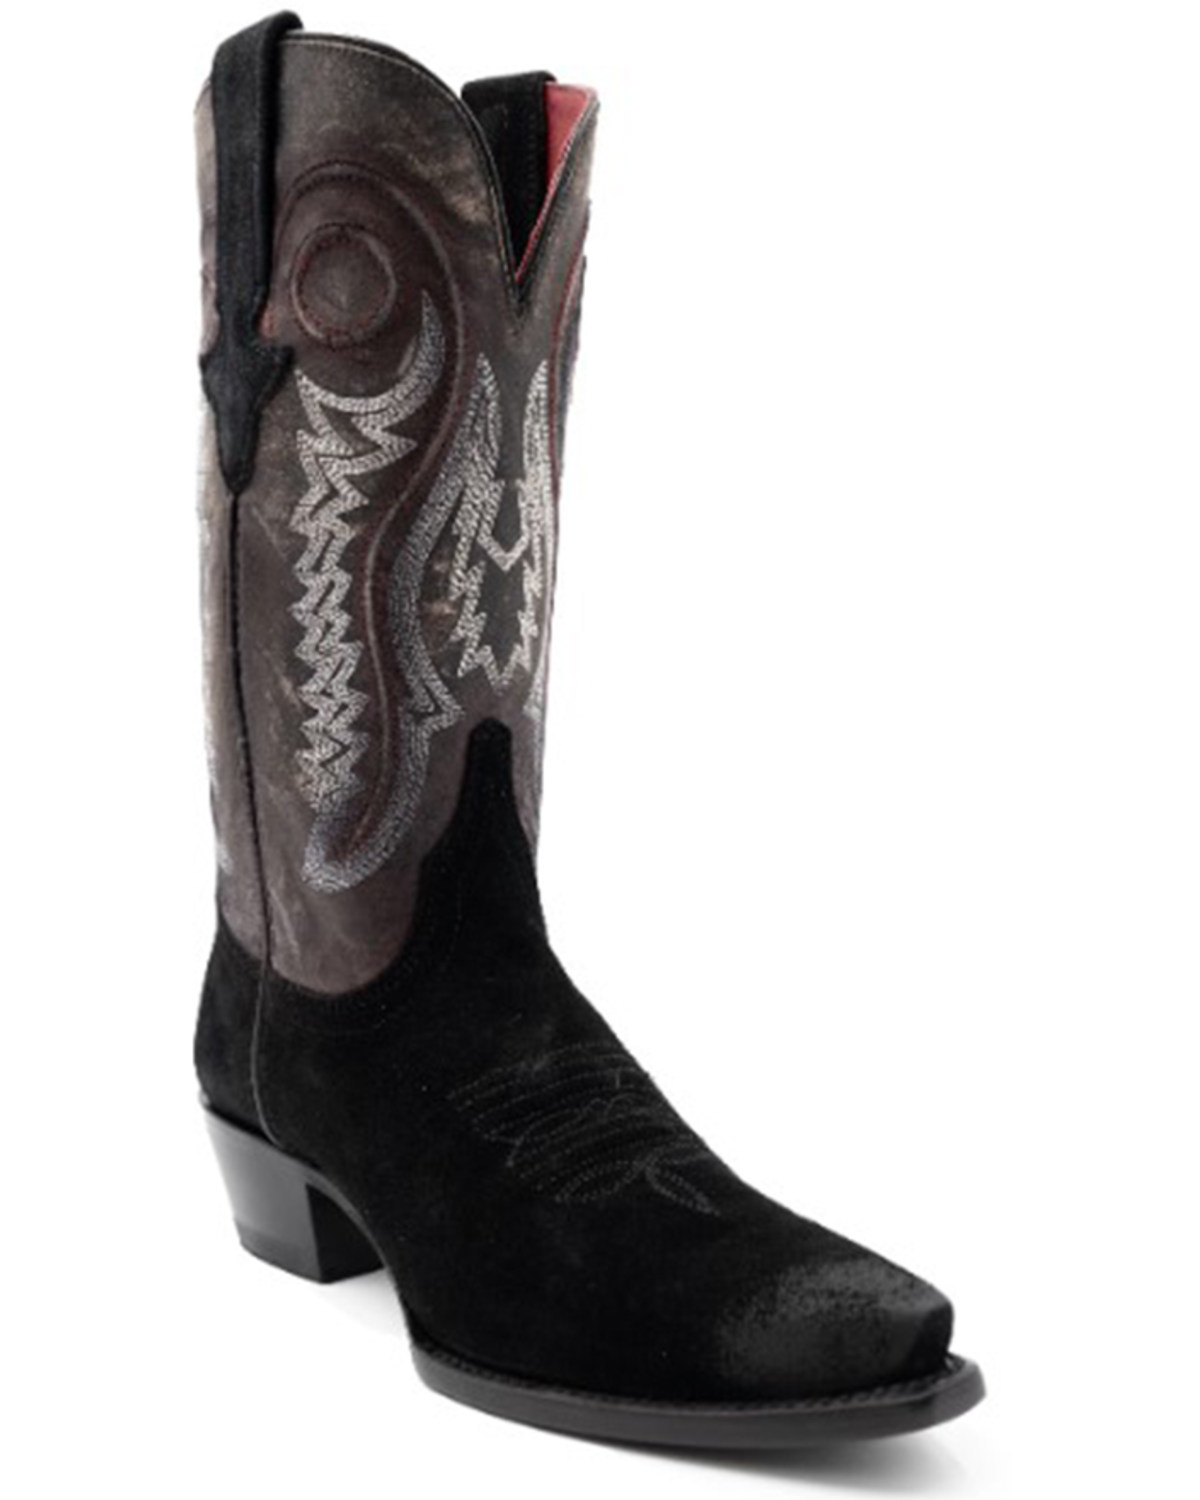 Ferrini Women's Roughrider Western Boots - Snip Toe